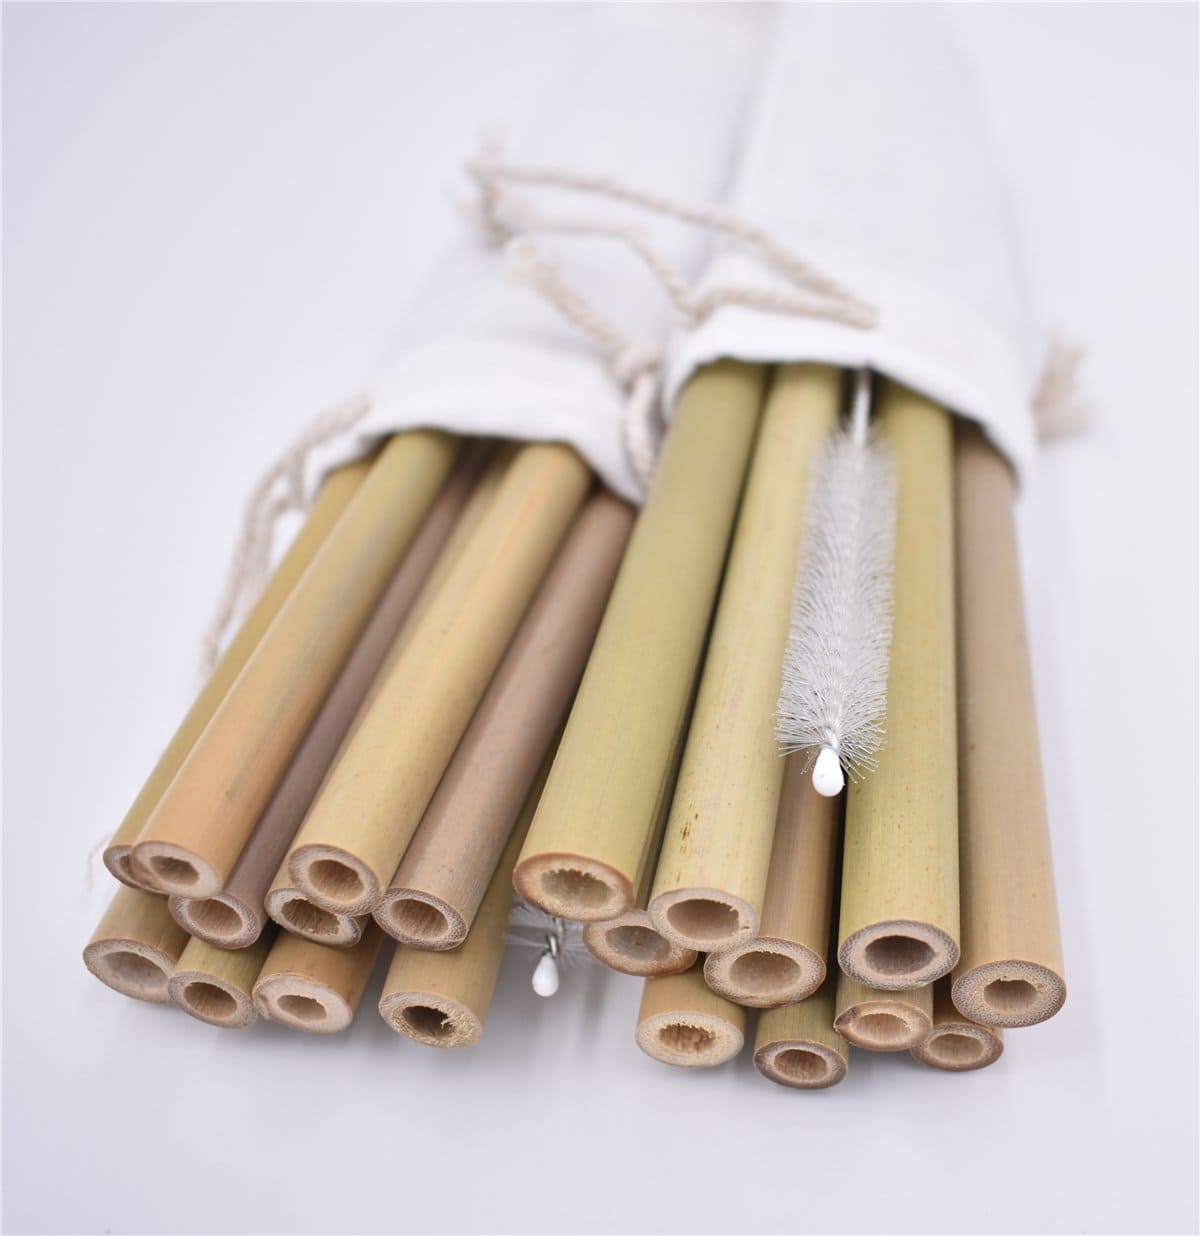 Pailles en Bambou Nature avec Pochette | Bambou Calme